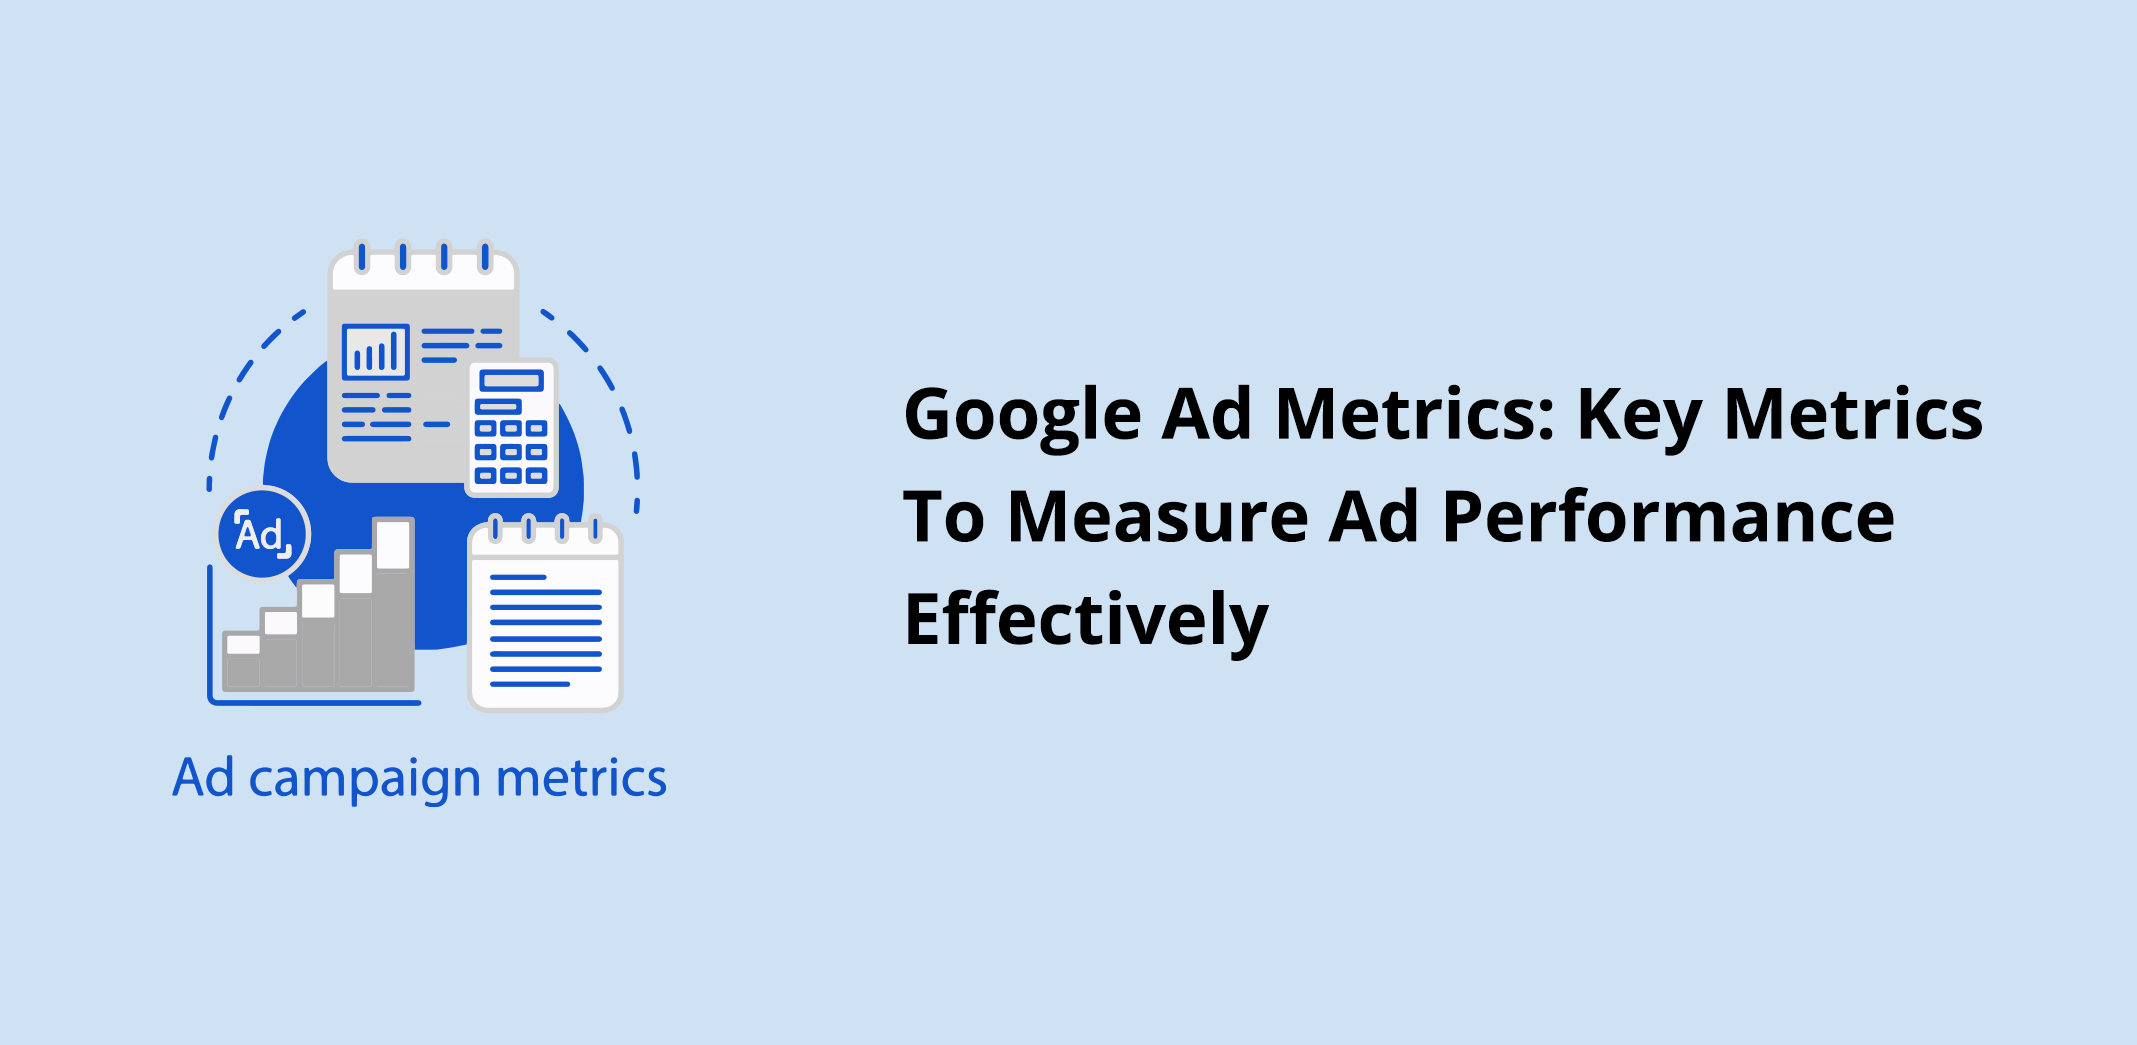 Google Ad Metrics: Key Metrics To Measure Ad Performance Effectively